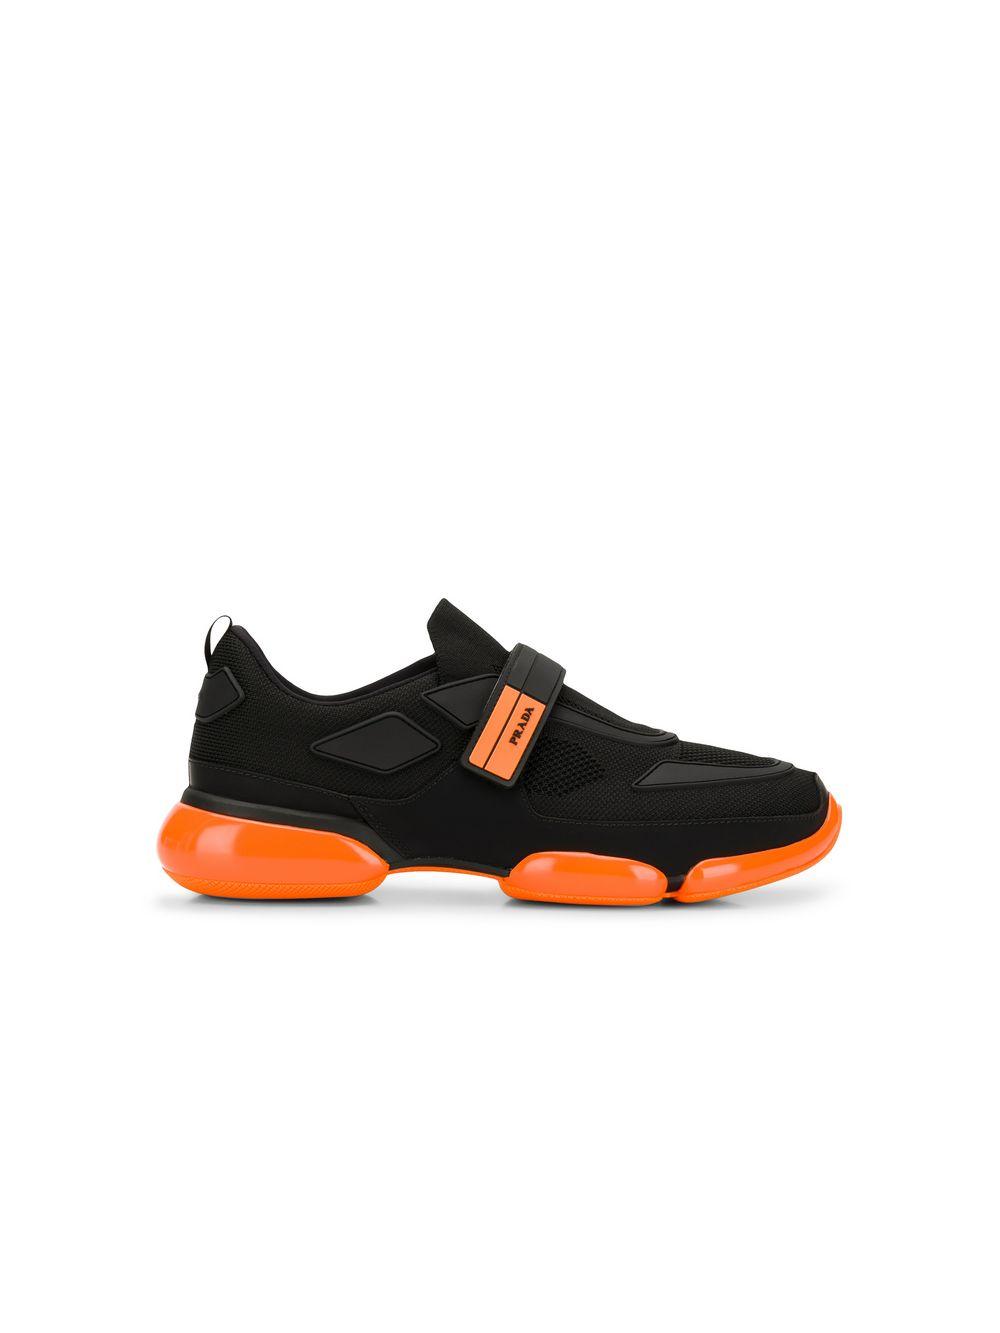 Prada Rubber Black And Orange Cloudbust Sole Detail Sneakers for Men - Lyst